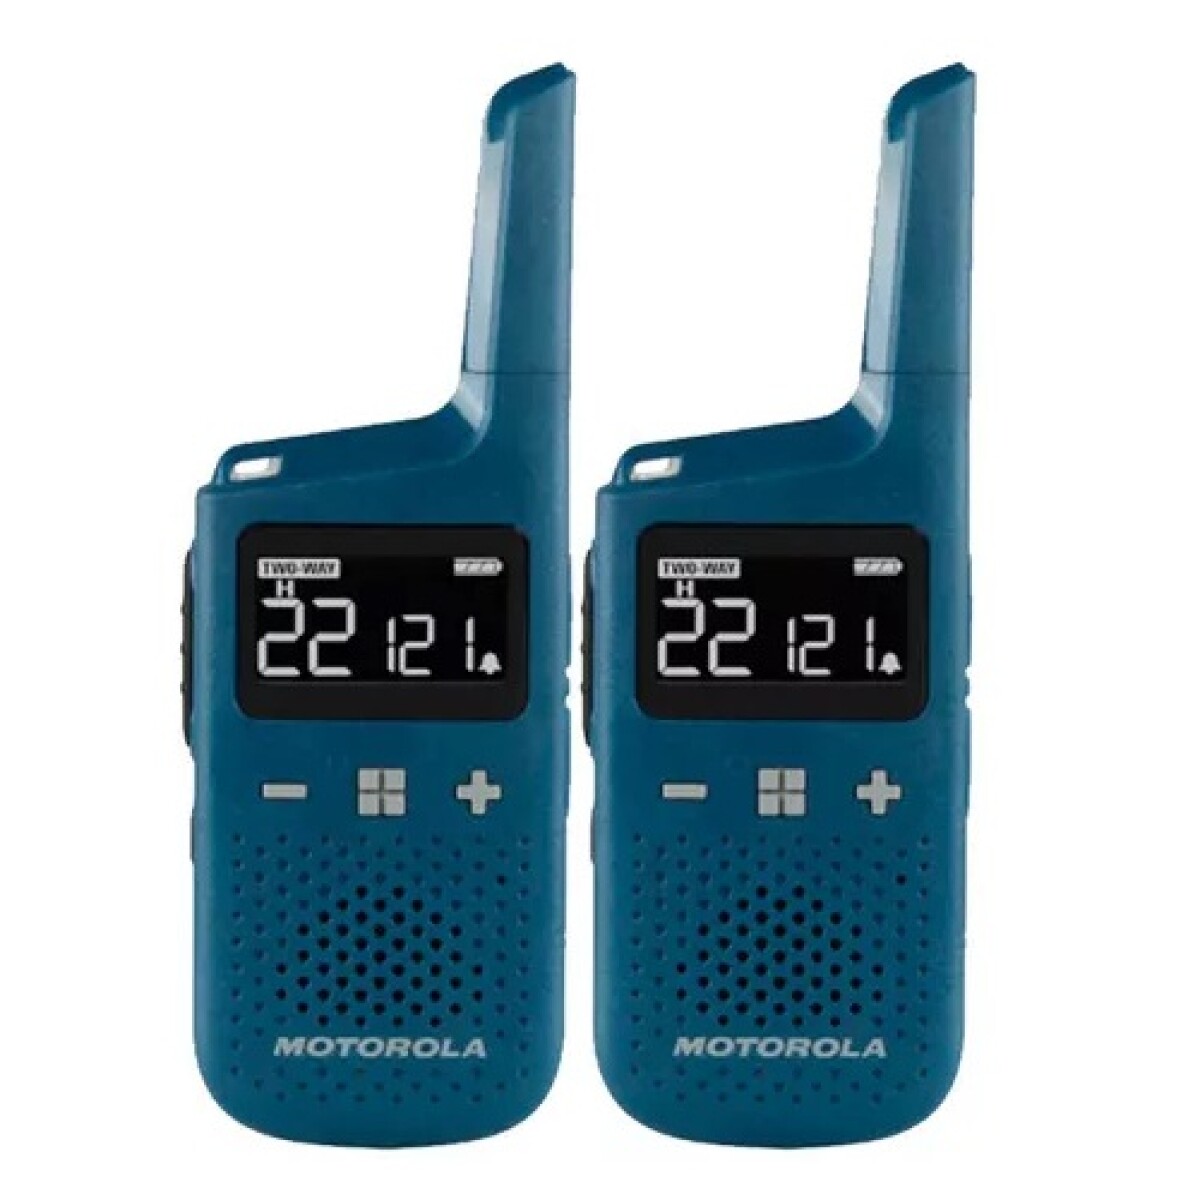 Handy Motorola T383 Two-way (2-pack) - Blue 